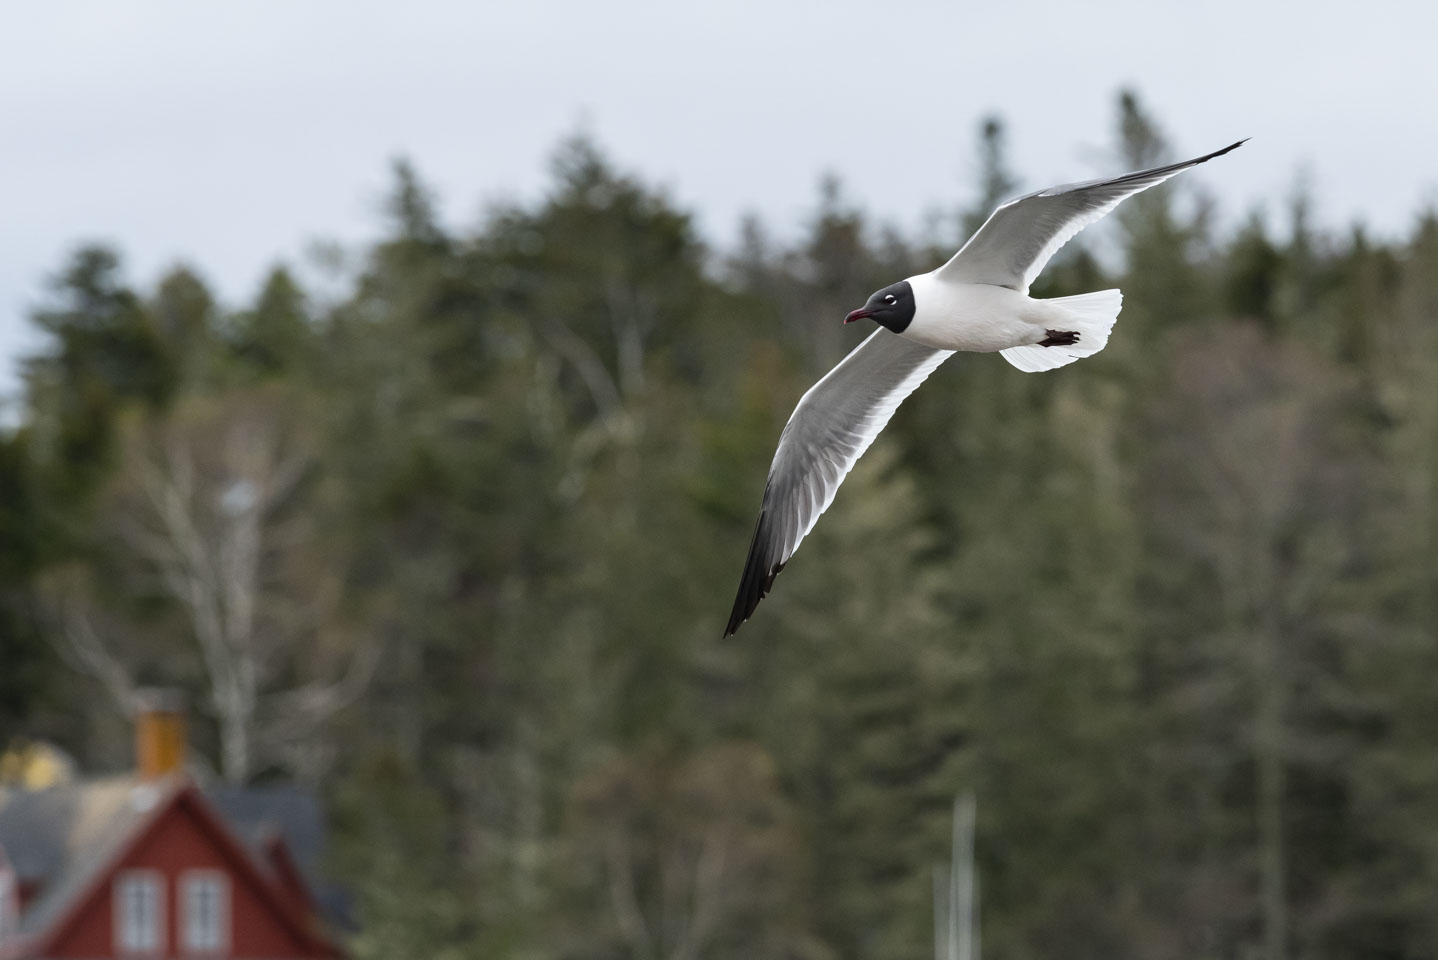 Laughing Gull in flight